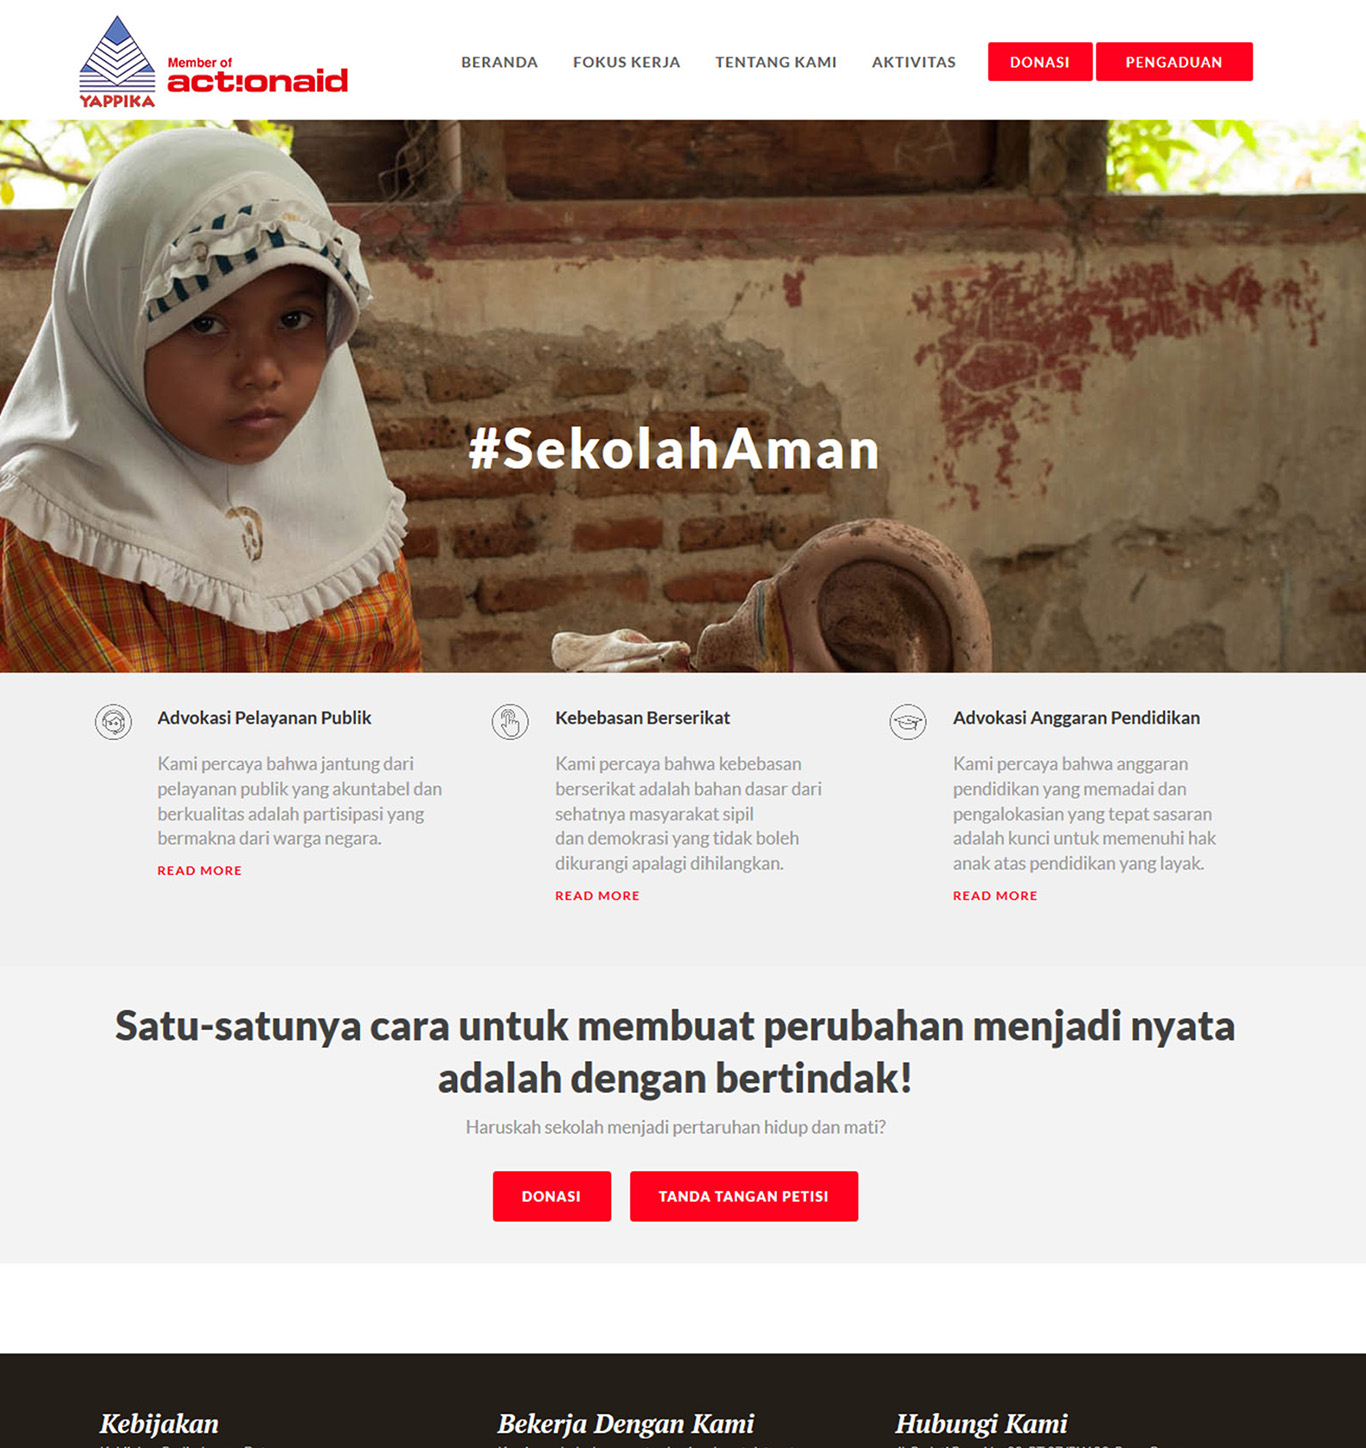 Komunigrafik project portfolio inspiration template web design and web developer, Yappika ActionAid Organization, web donation and campaign crowd funding, and charity, foundation, Jakarta Selatan, Indonesia